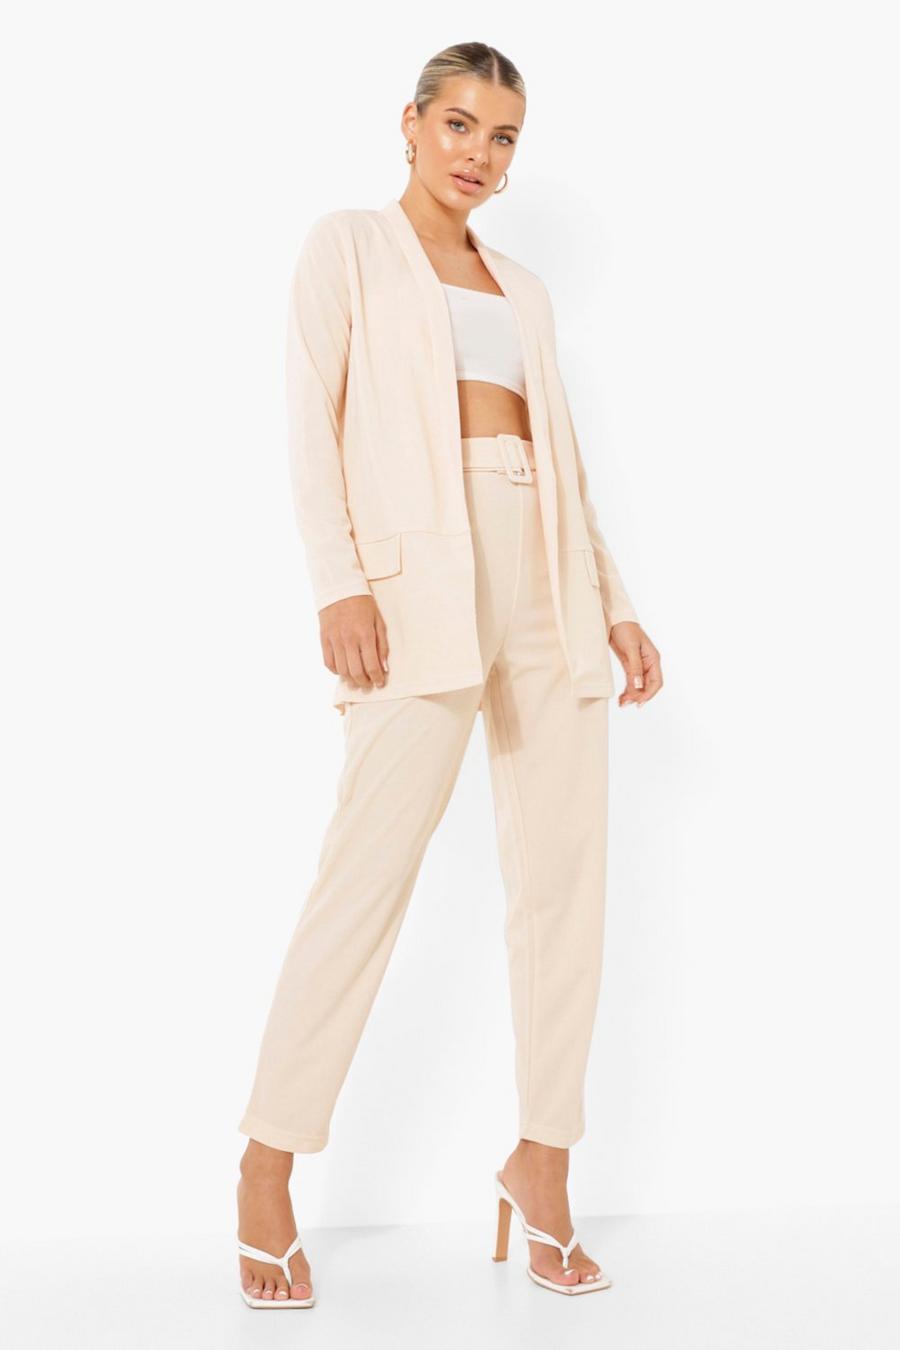 Blush rosa Blazer & Self Fabric Trouser Suit Set